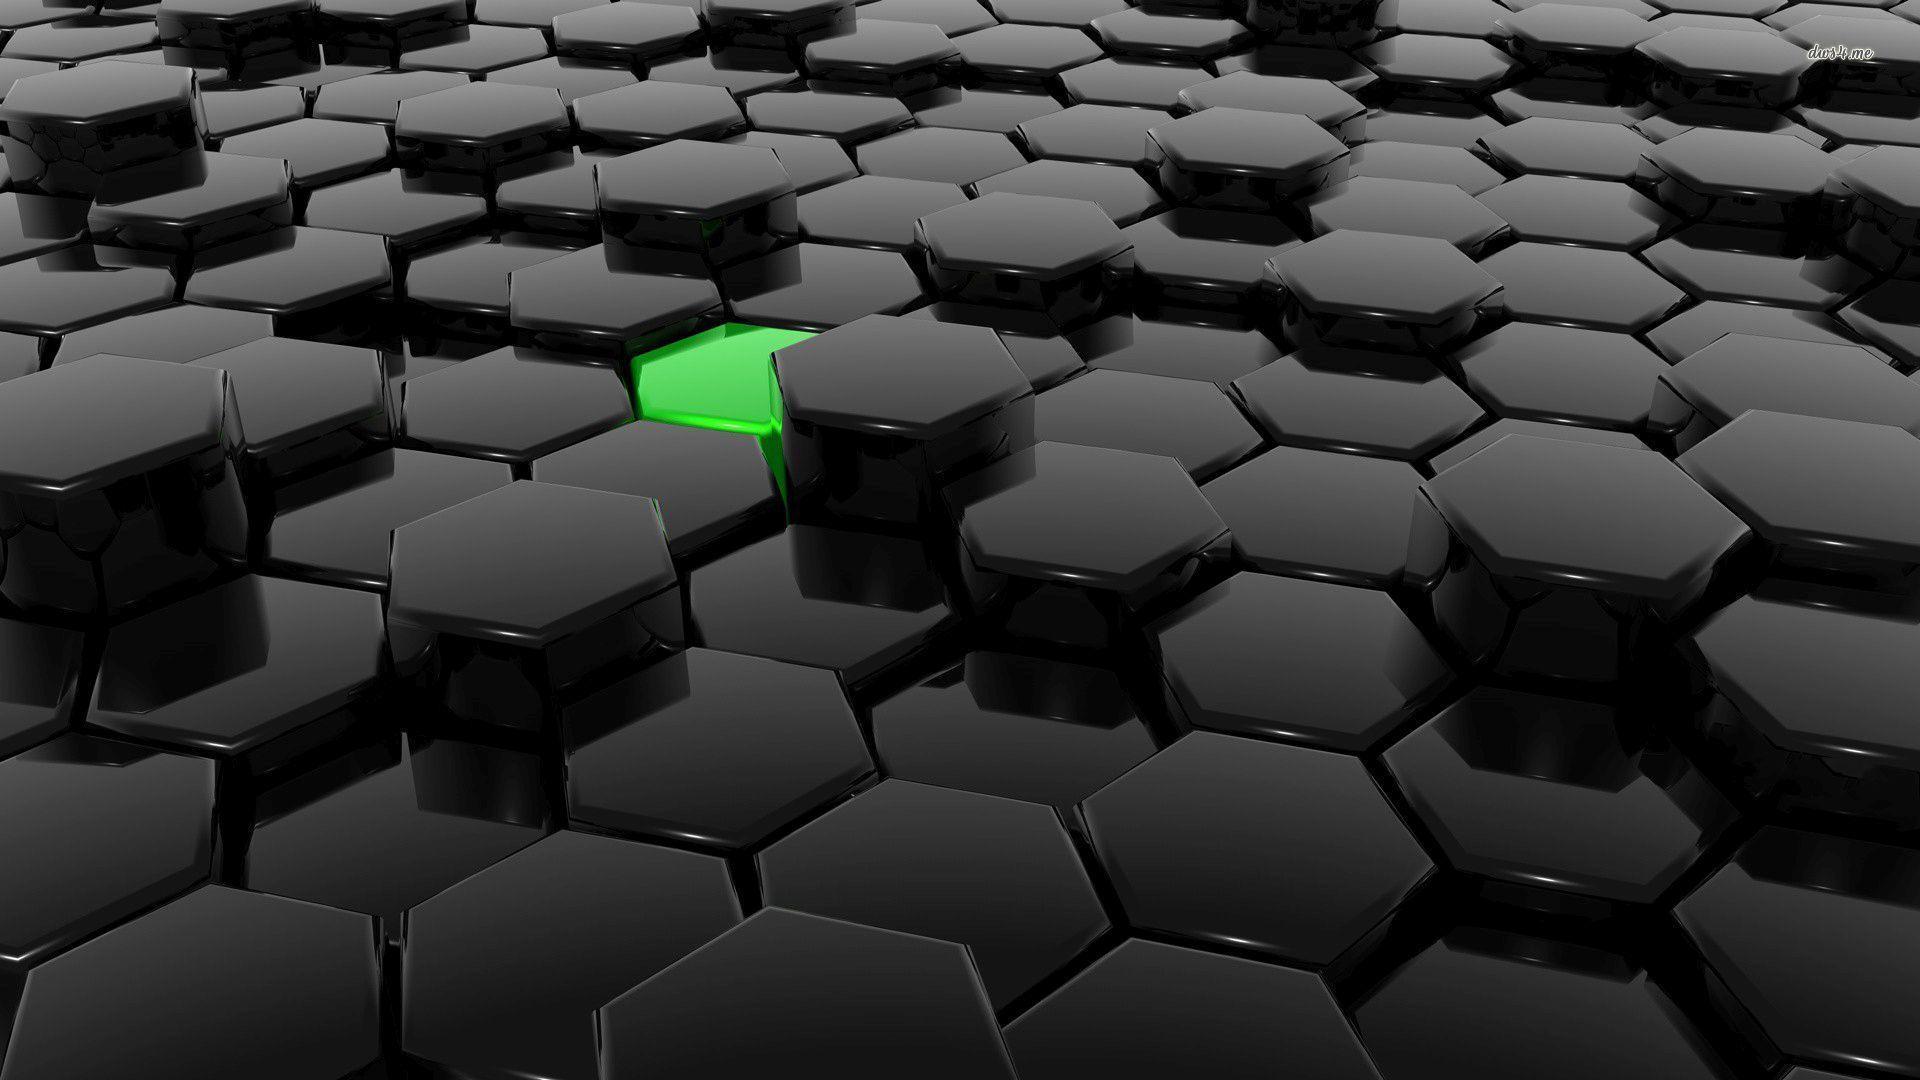 3D Block Wallpaper Black Hexagons Protecting The Green One Wallpaper 3D